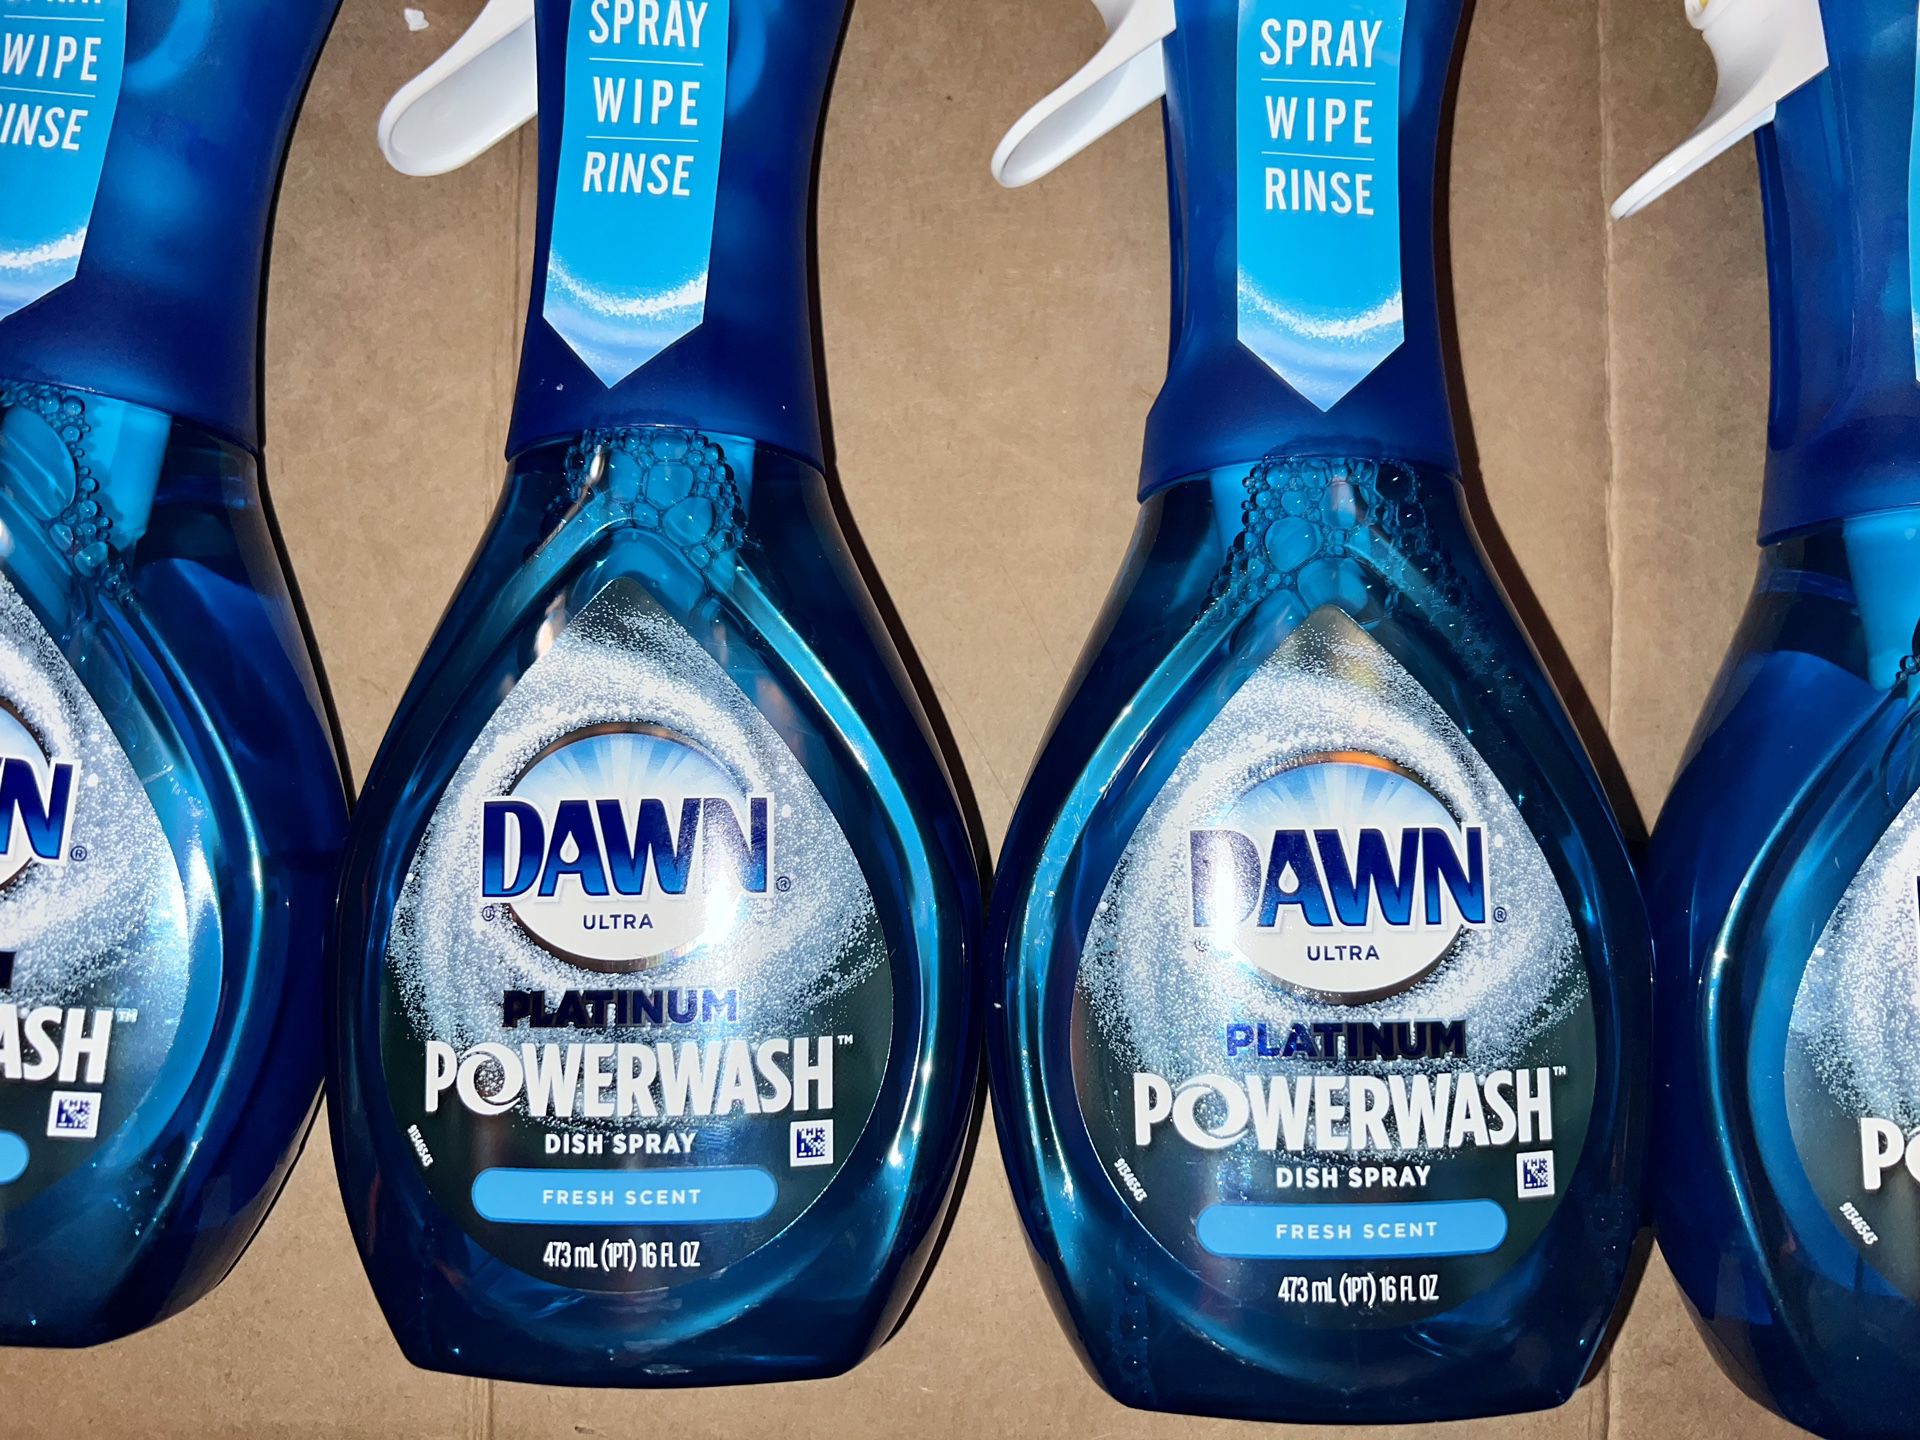 Dawn Platinum Powerwash Dish Spray, Dish Soap, Fresh Scent, 16 Fl Oz 